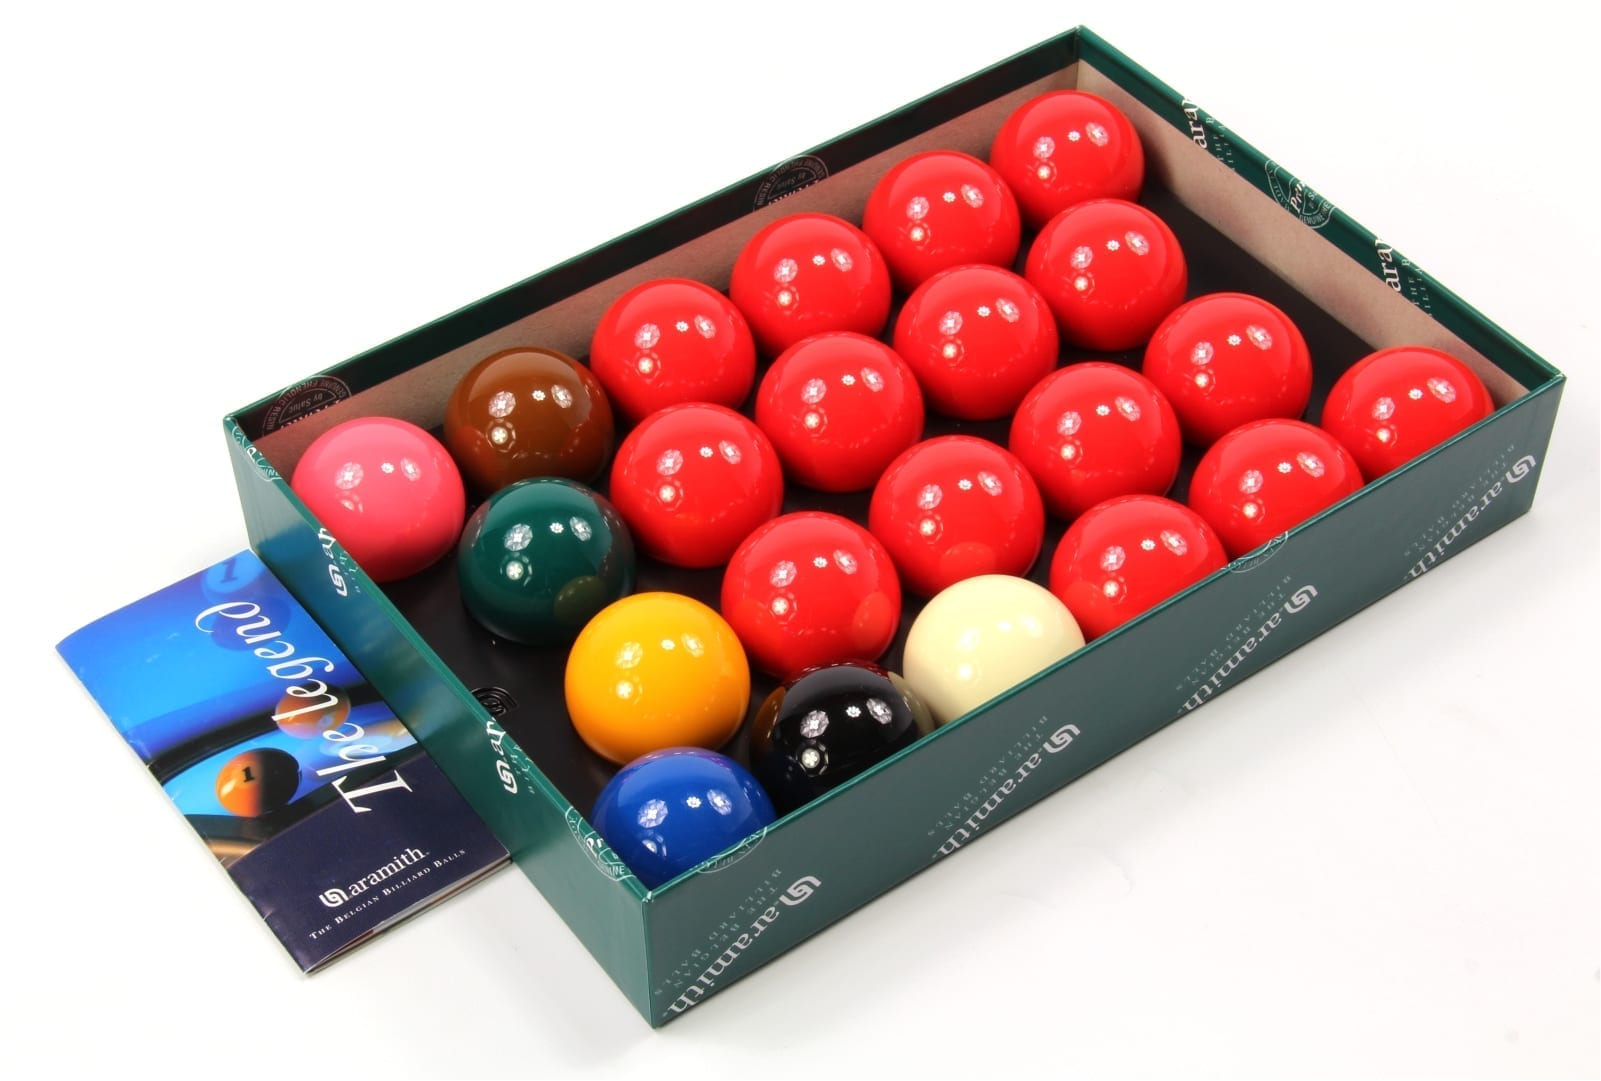 2inch (50.8mm) Aramith Premier Snooker Ball Set - 22 Balls